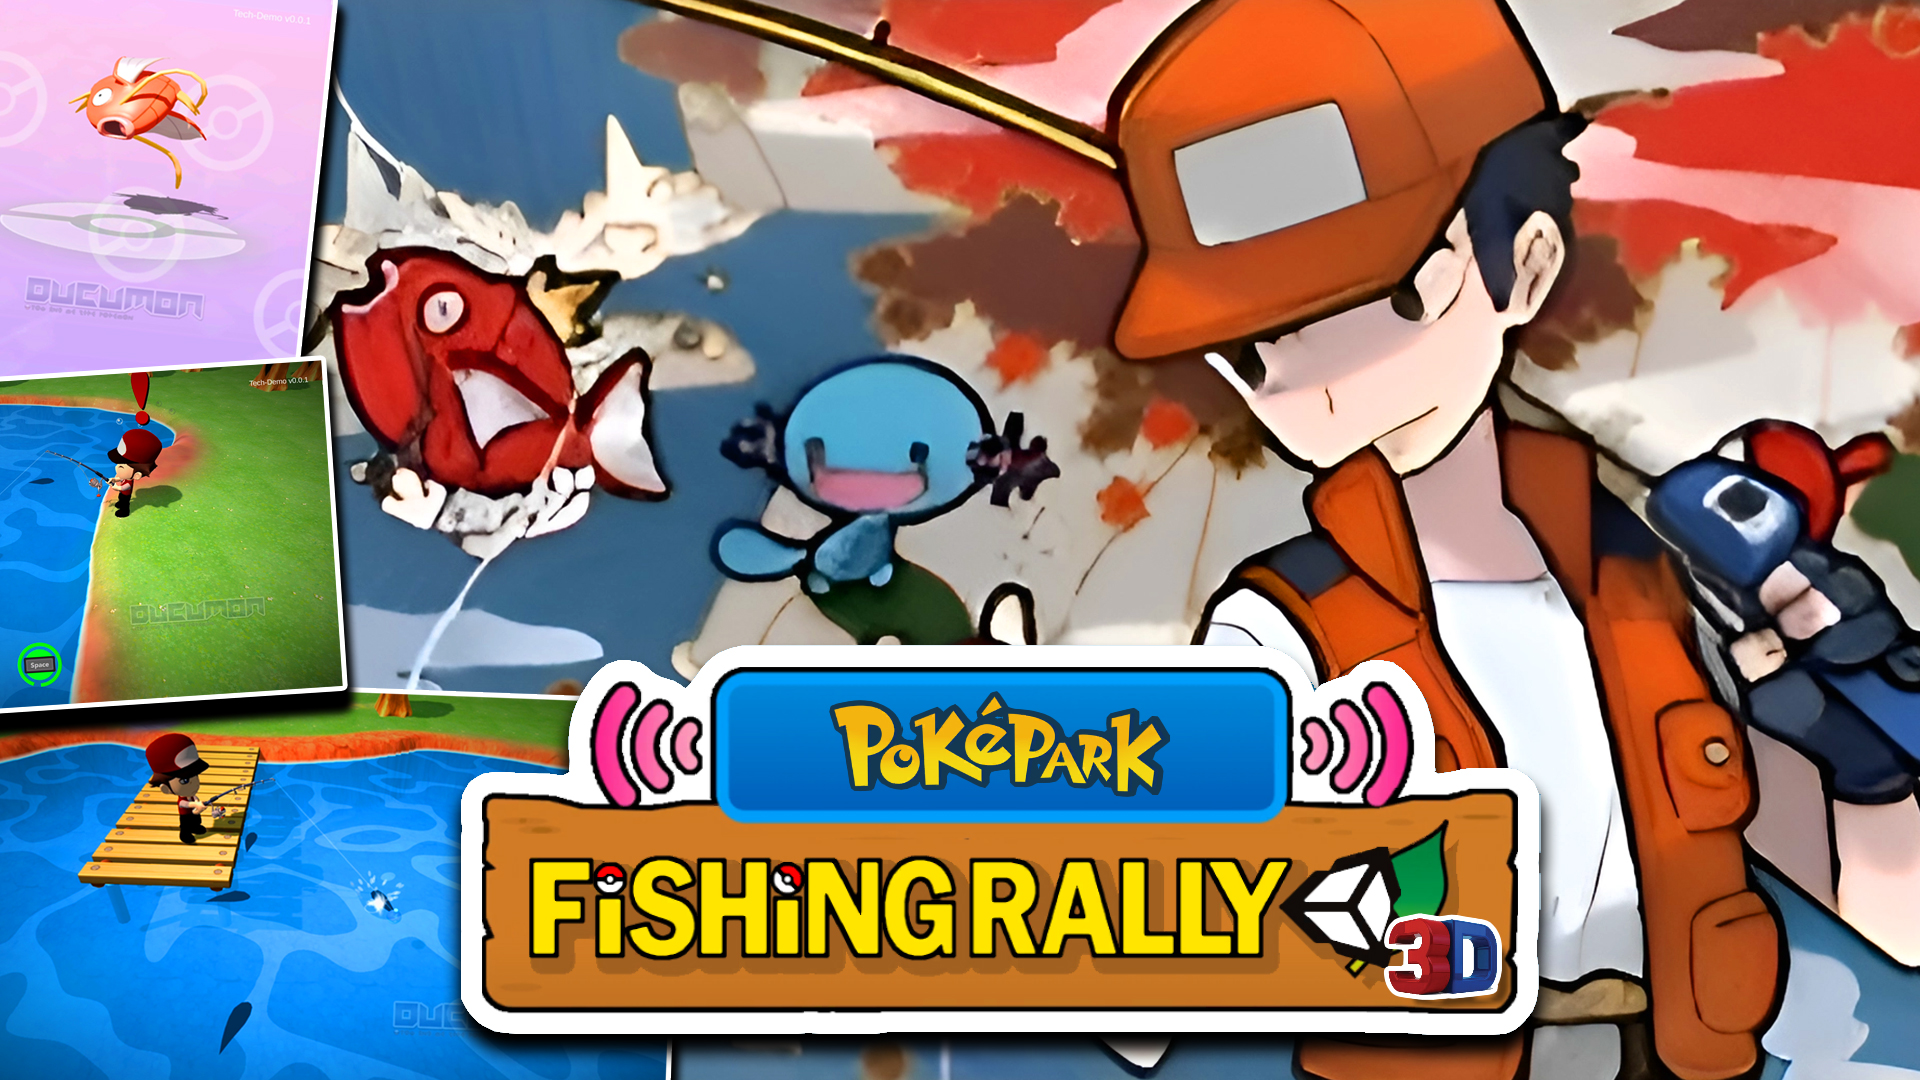 PokePark Fishing Rally 3D Unity — фанатская игра, в которую вы играете за рыбака, 3D-версия PPF